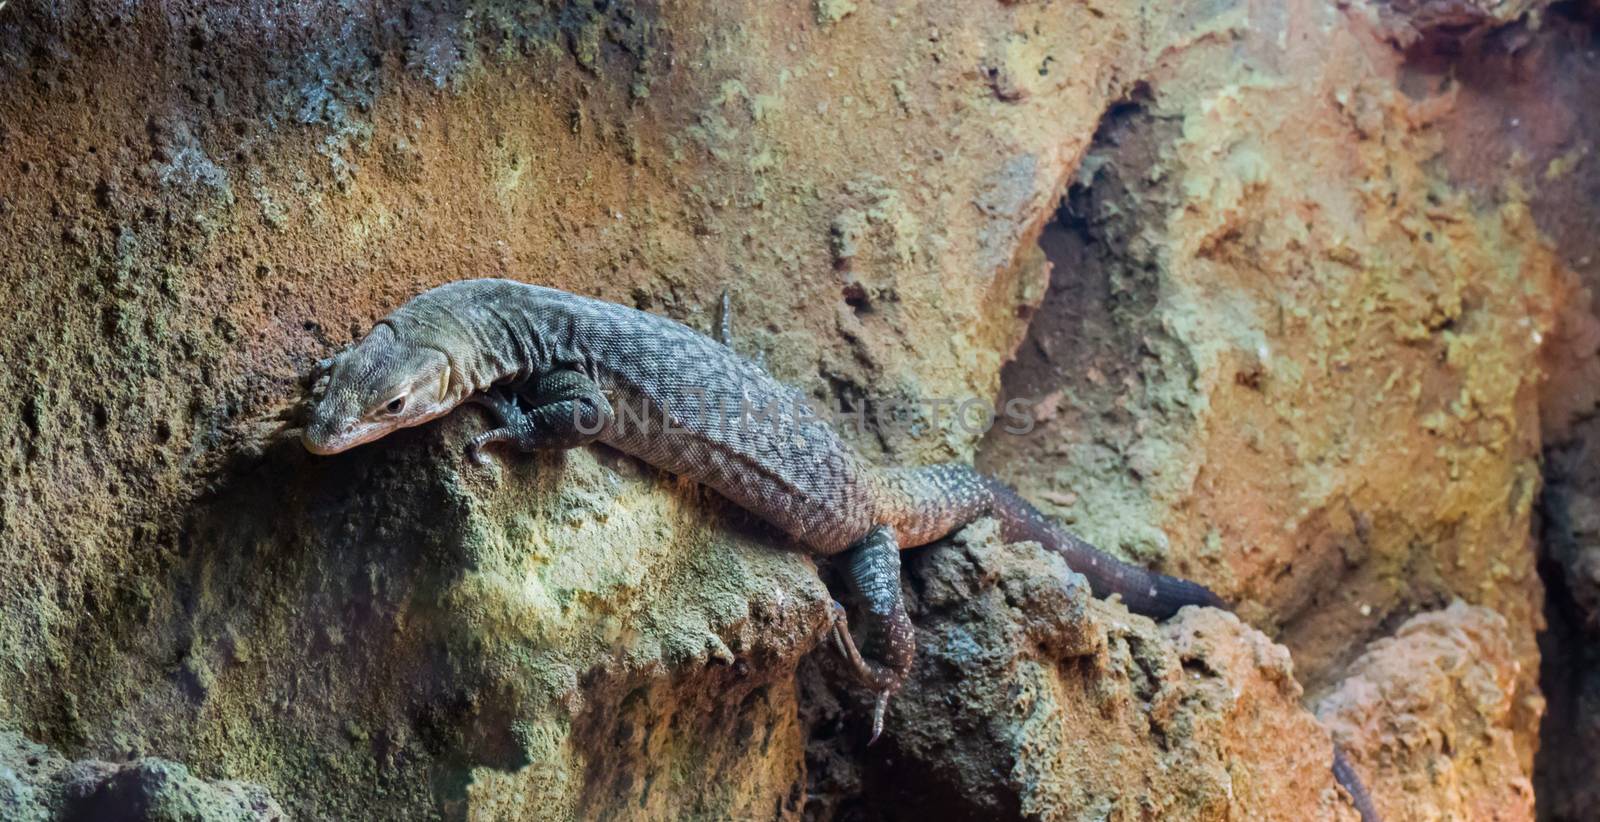 Big storr's monitor lizard a tropical terrarium pet that lives in australia by charlottebleijenberg